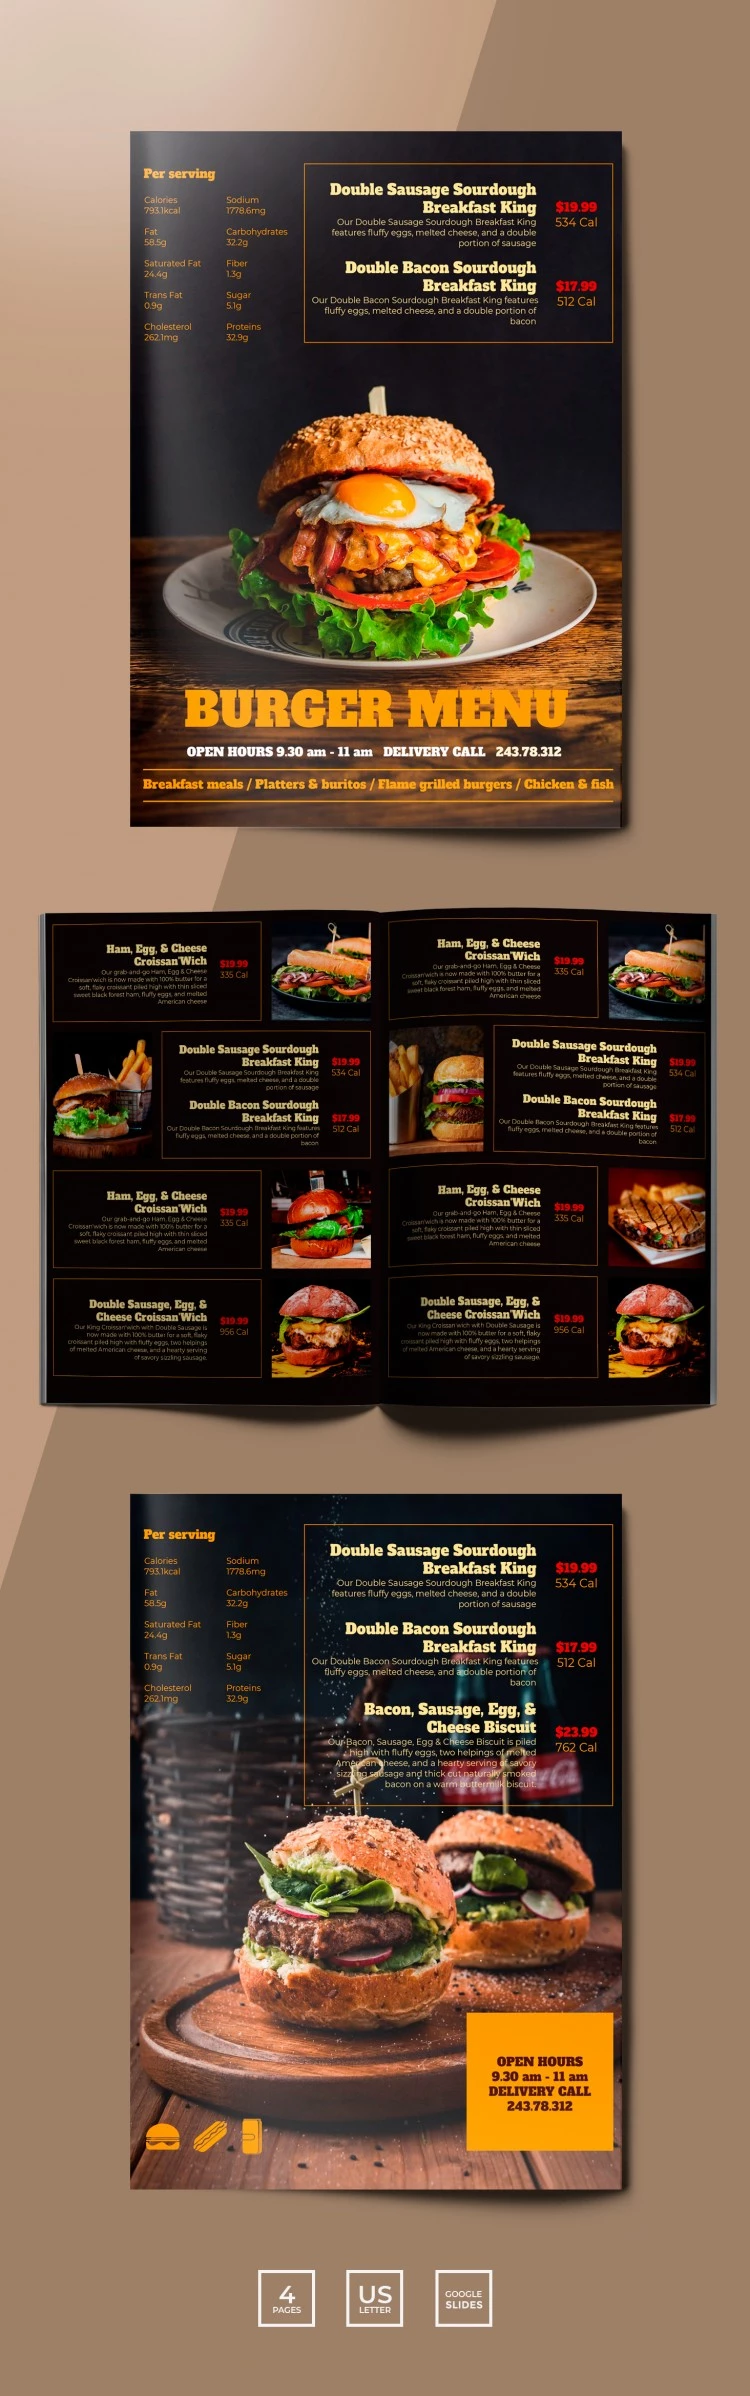 Burger Menu Restaurant - free Google Docs Template - 10061760